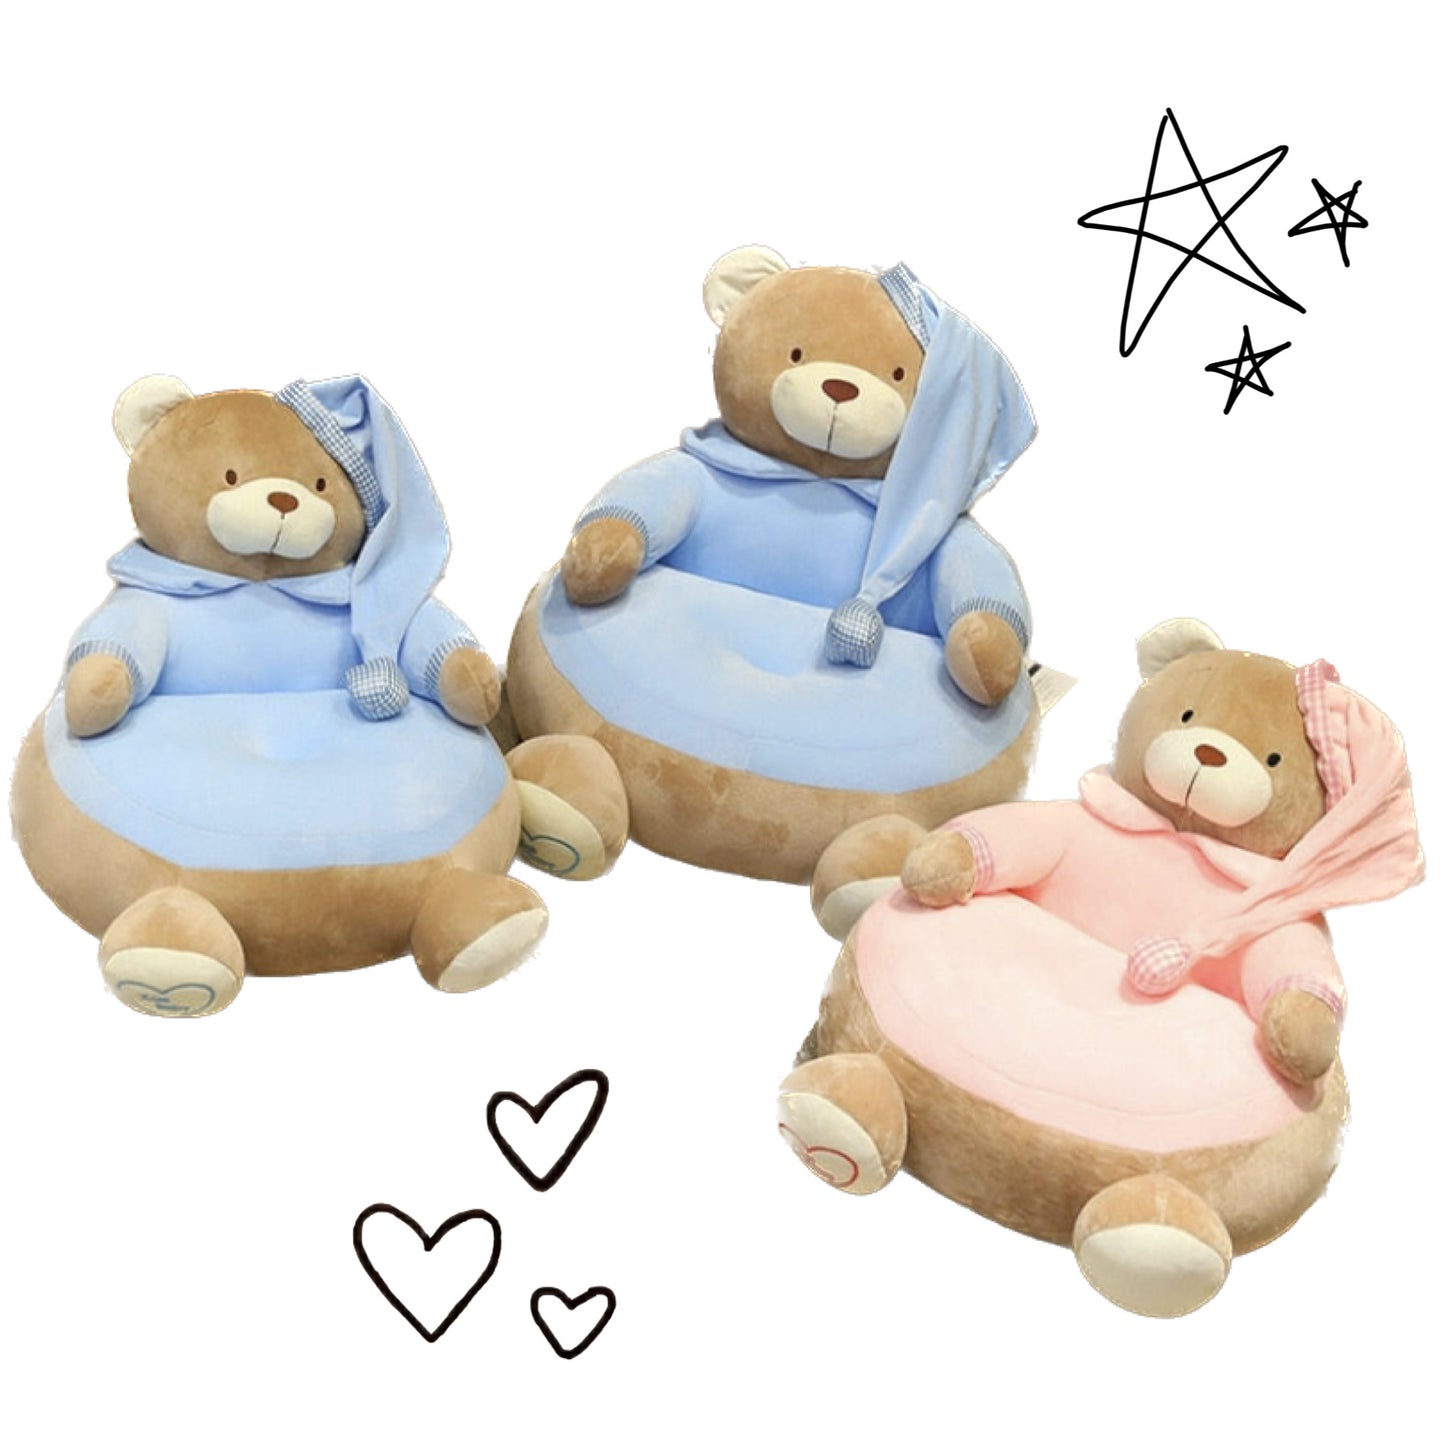 Cute Teddy Bear Sofa Plush